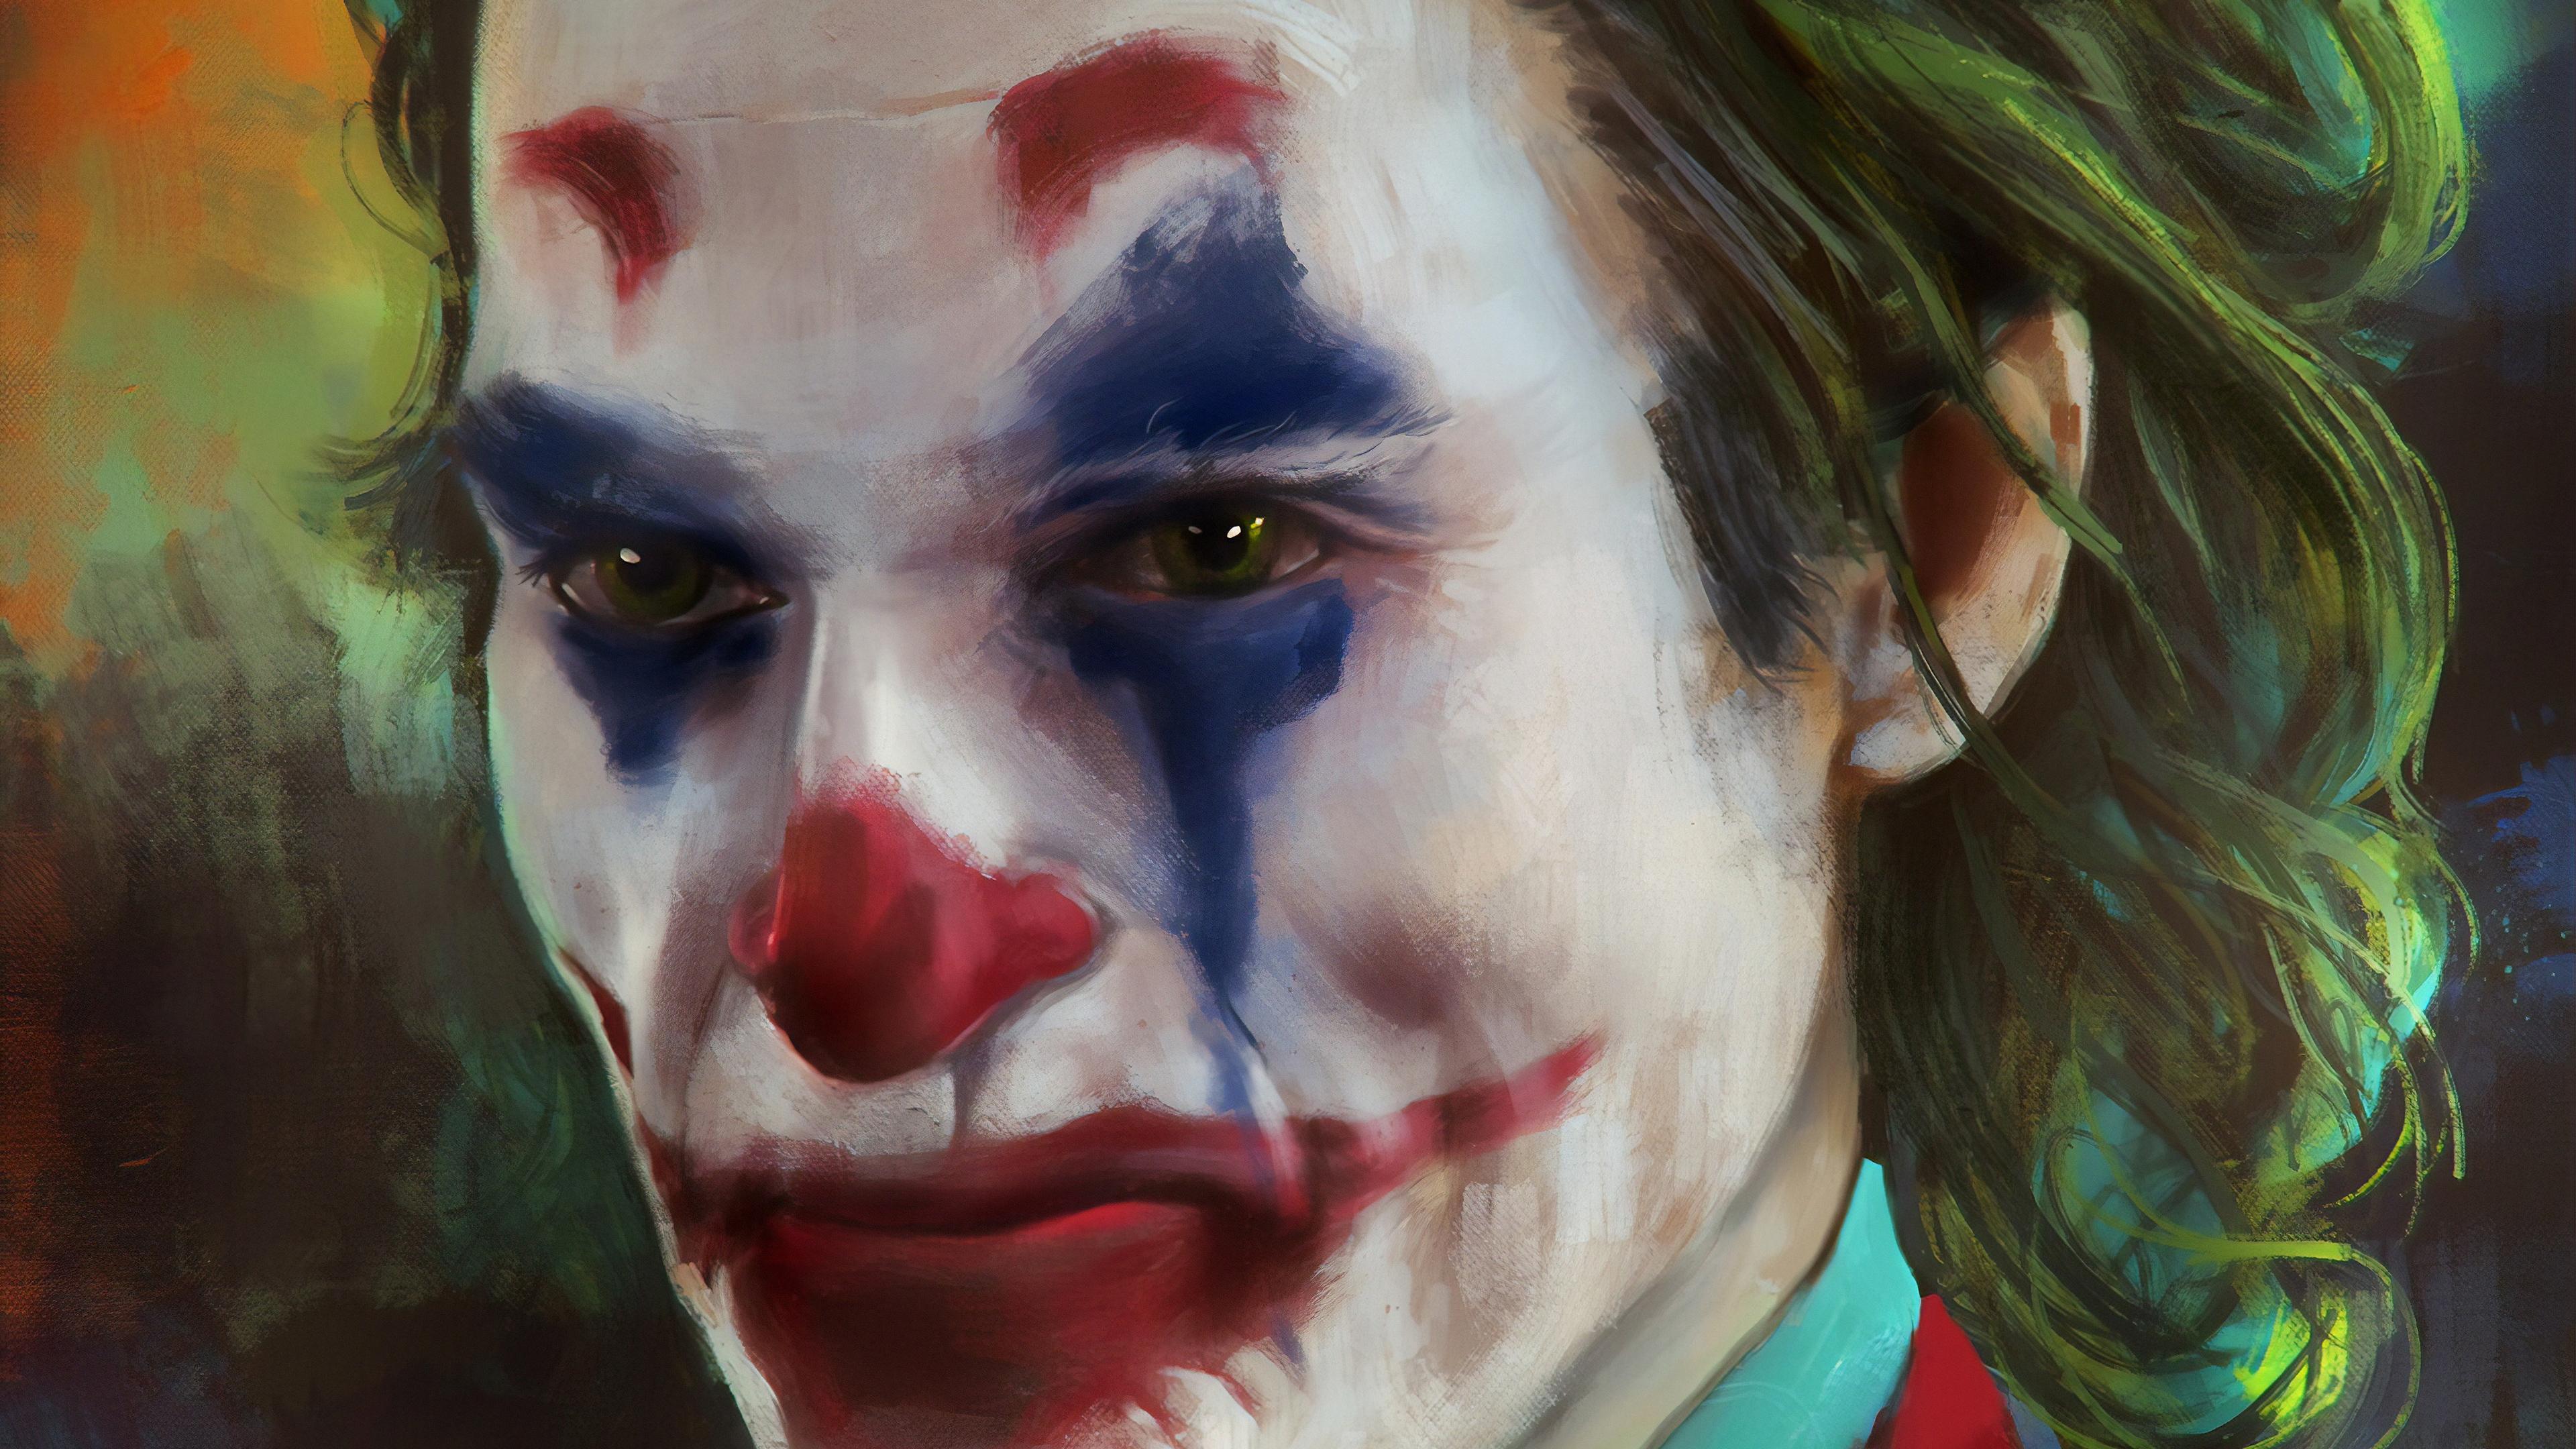 Wallpaper 4k The Joker Joaquin Phoenix 2019 movies